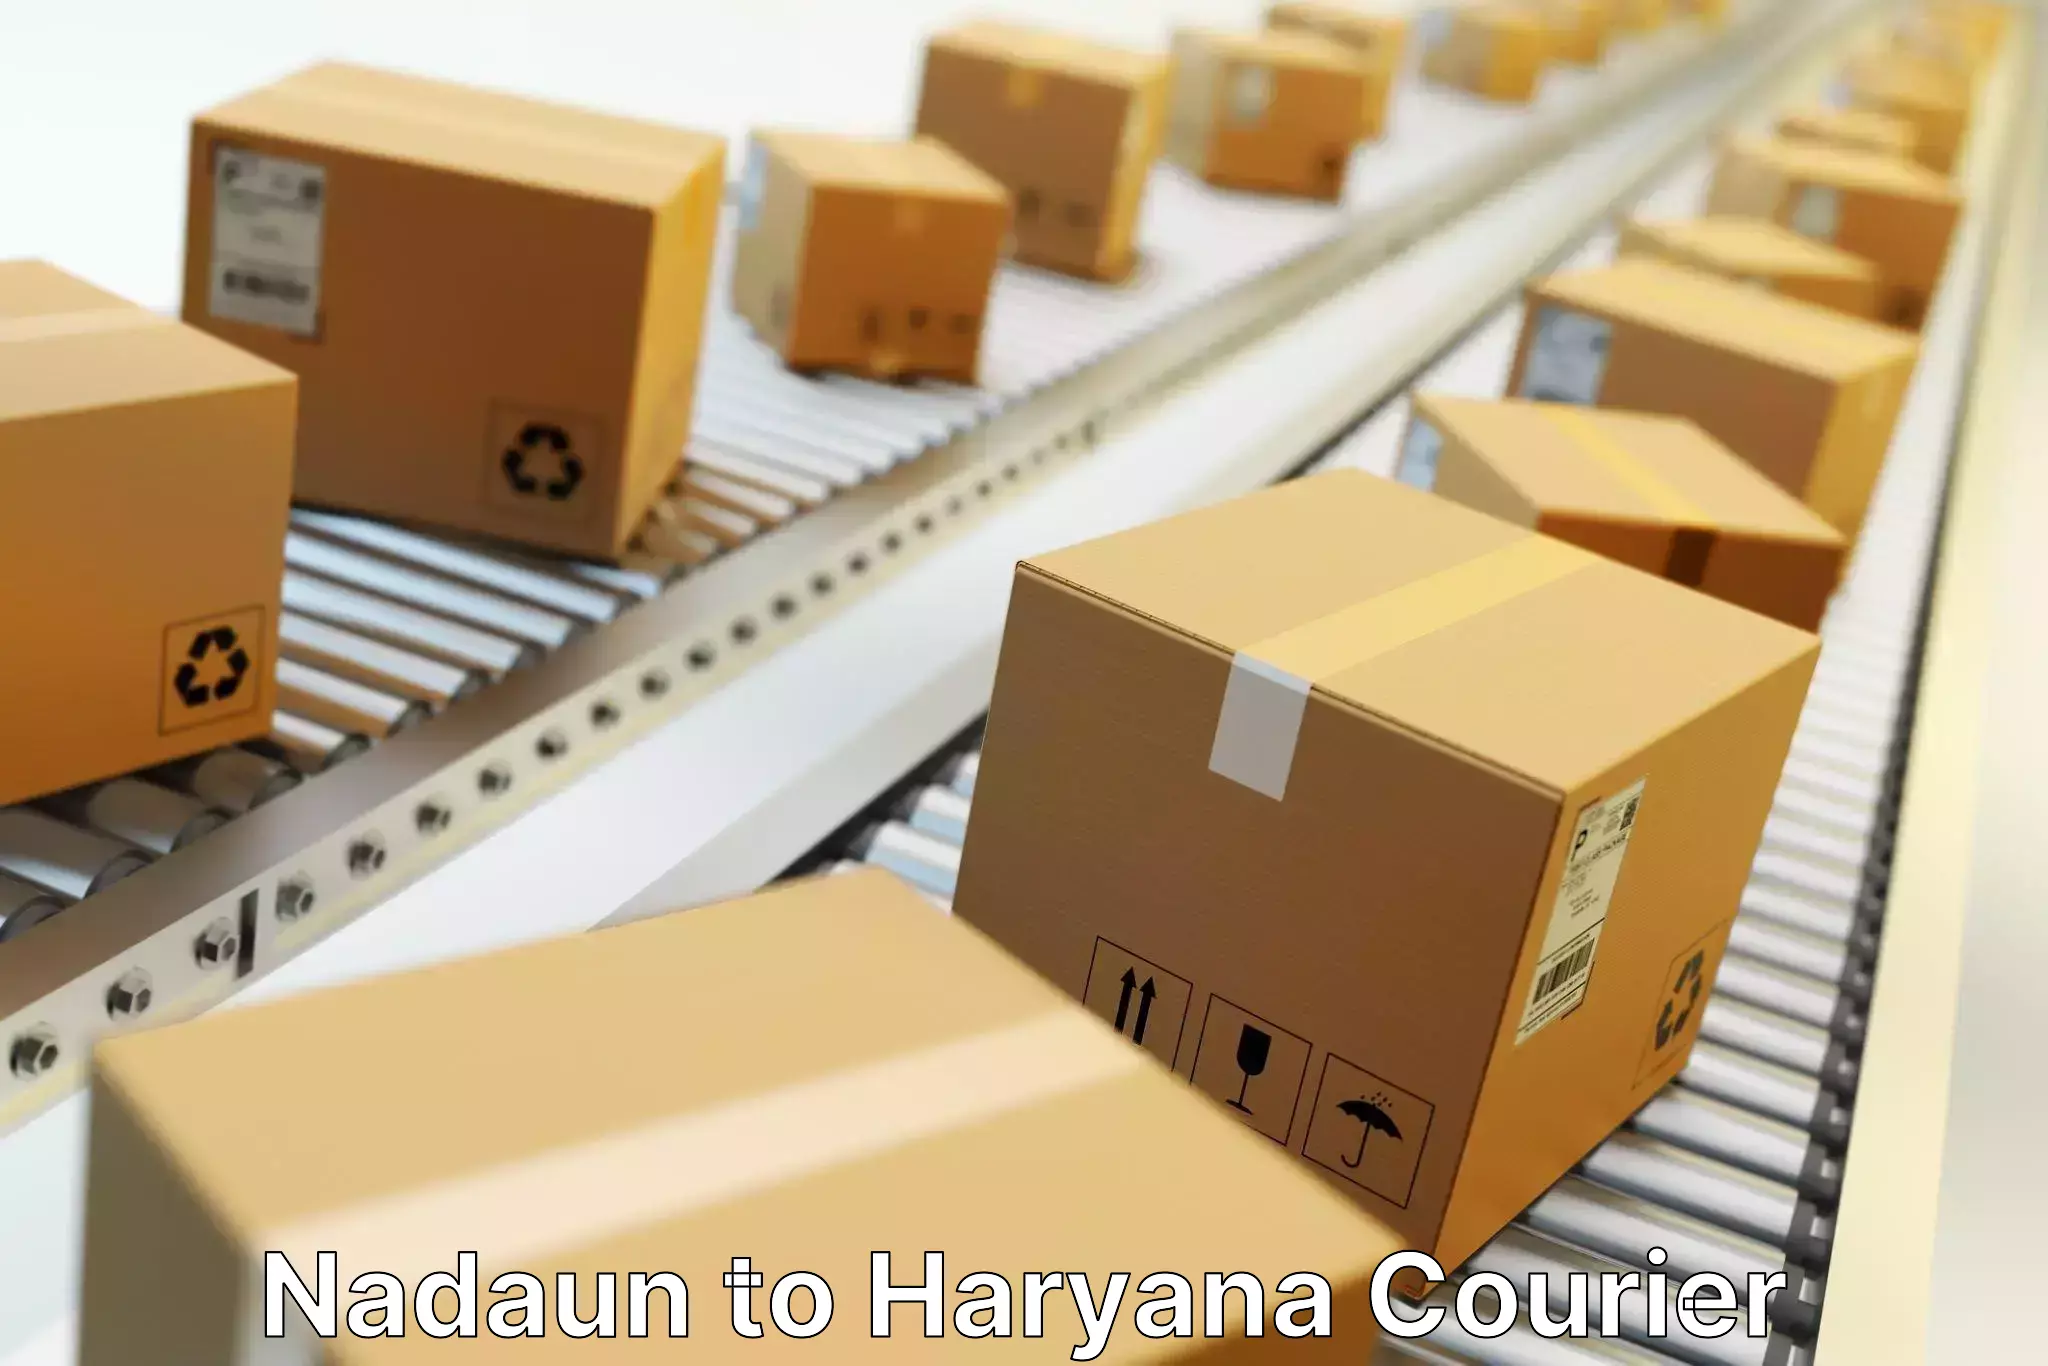 Express courier capabilities Nadaun to NCR Haryana